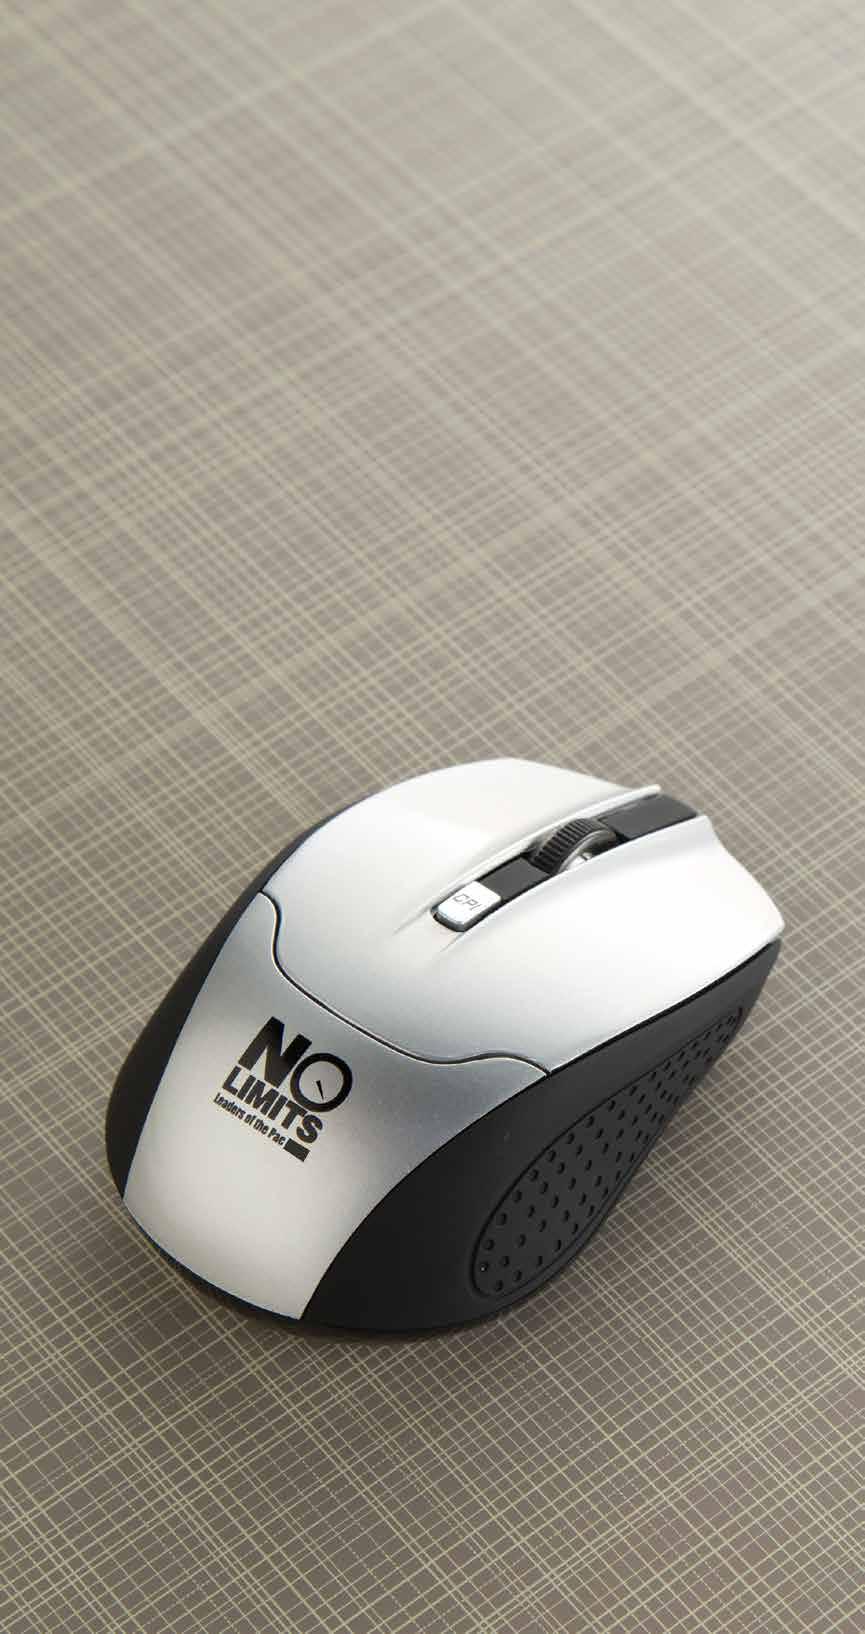 42 wireless mouse ergonomic smart design Wireless Optical Mouse MS1819 Wireless optical mouse. Ergonomic smart design with a plug and play nano receiver. * Wireless 2.